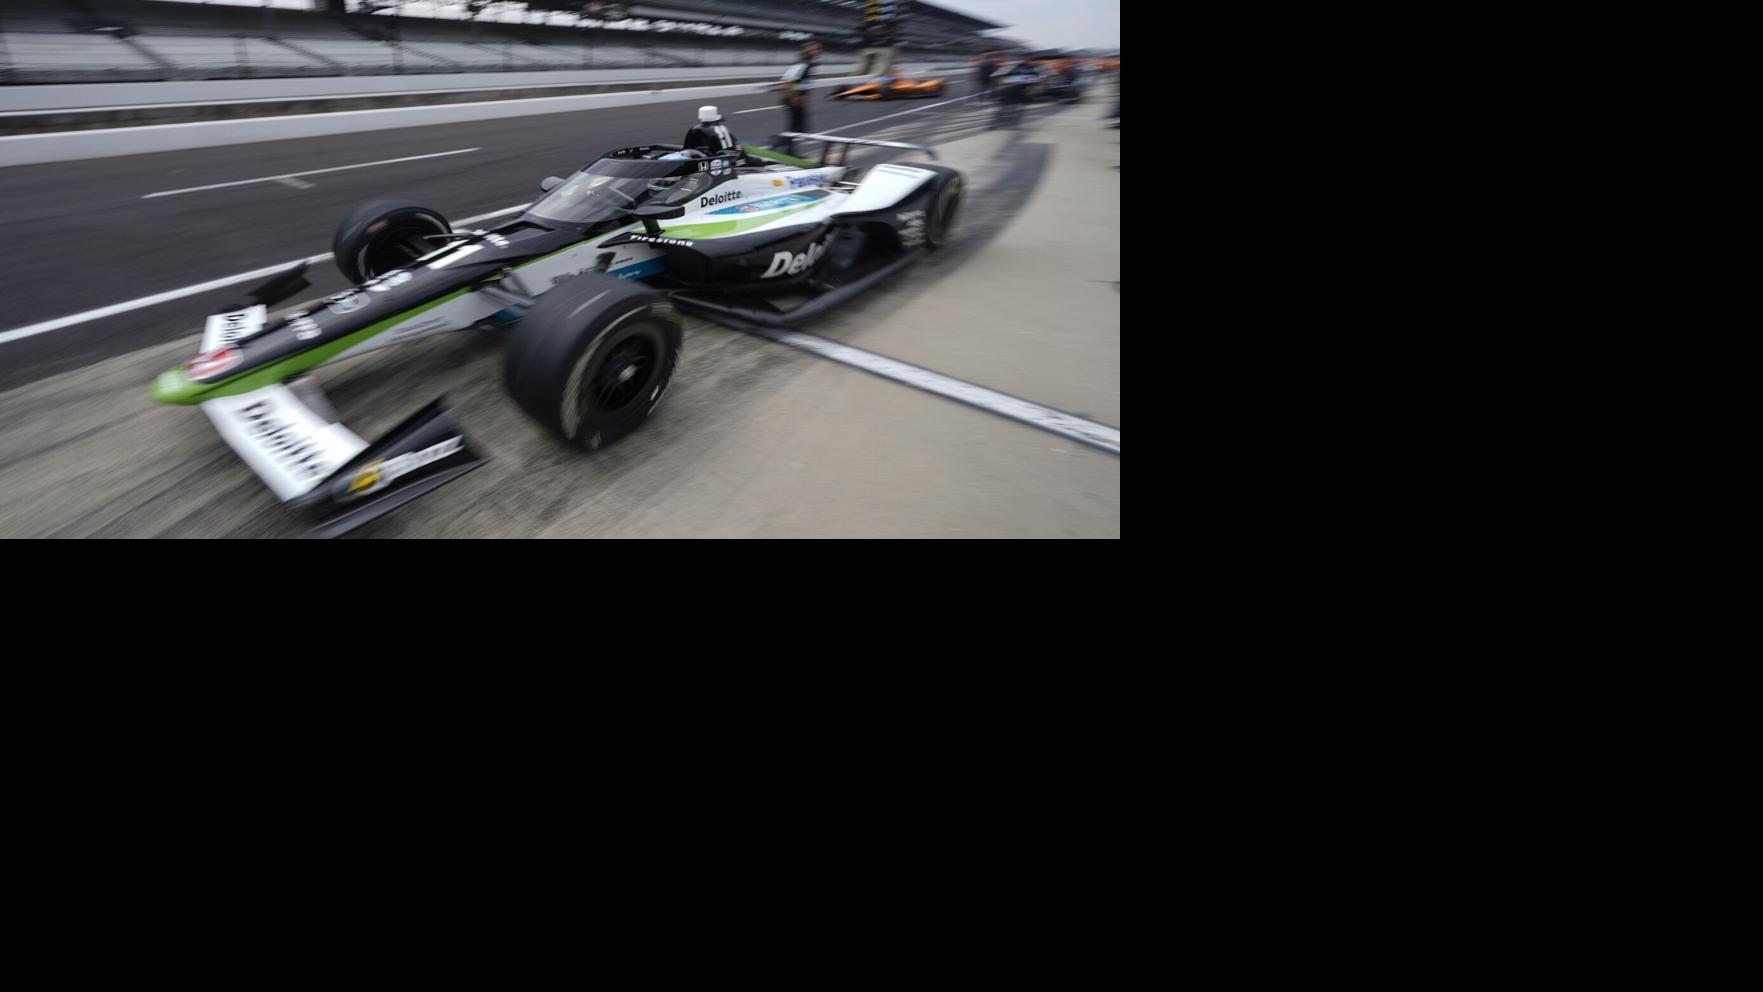 Sato, Ericsson put Ganassi on top in final Indy 500 practice